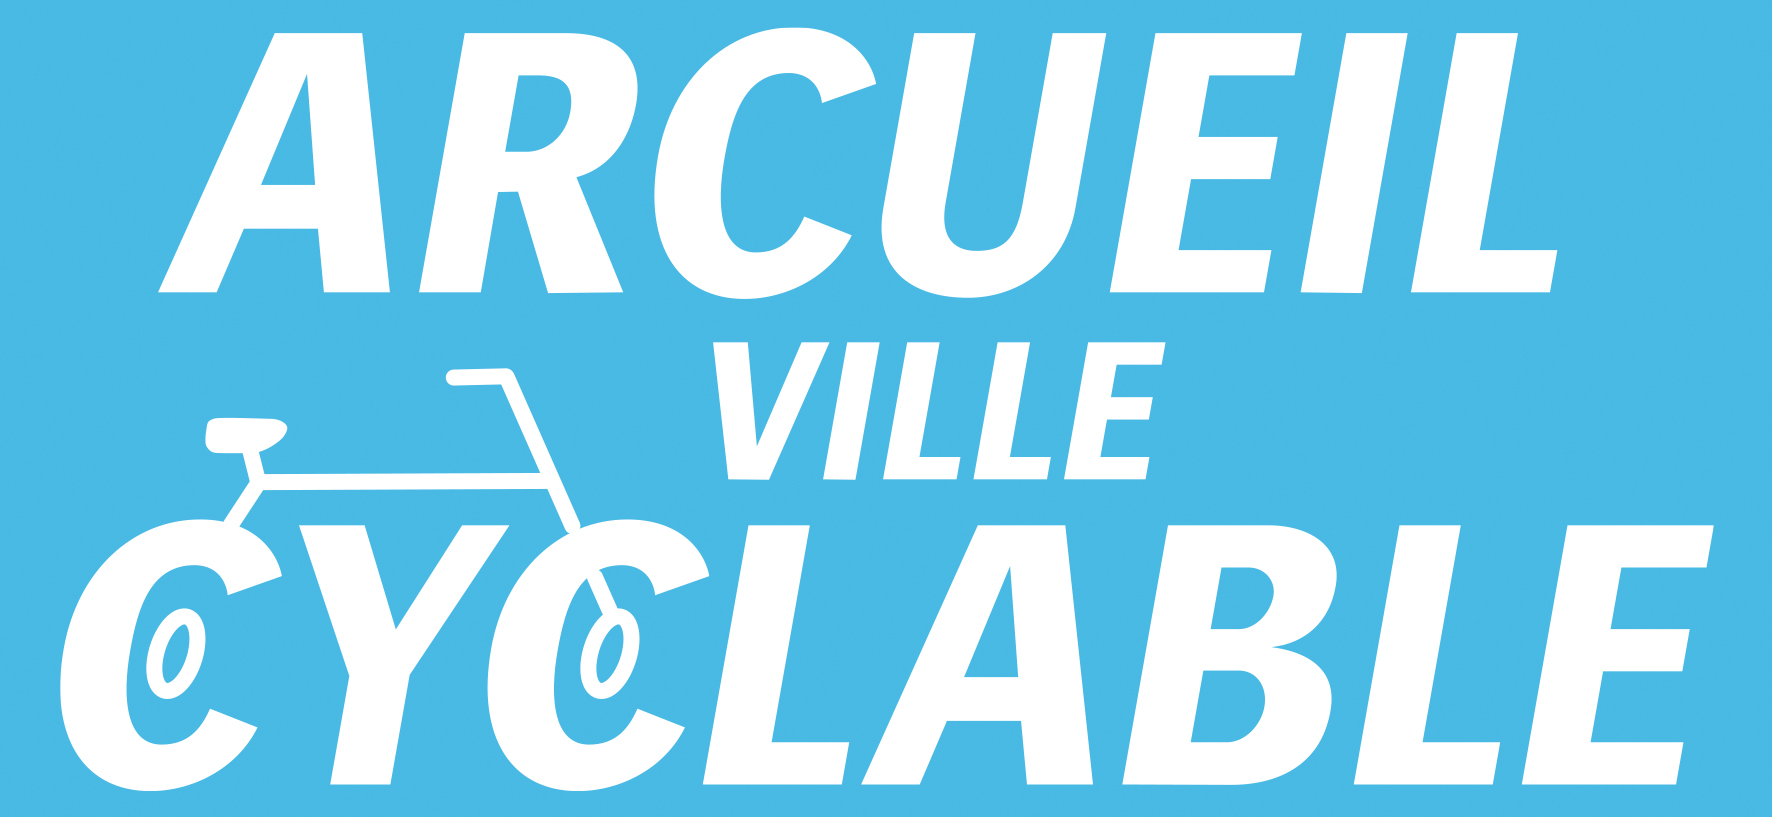 Arcueil-ville-cyclable.jpg